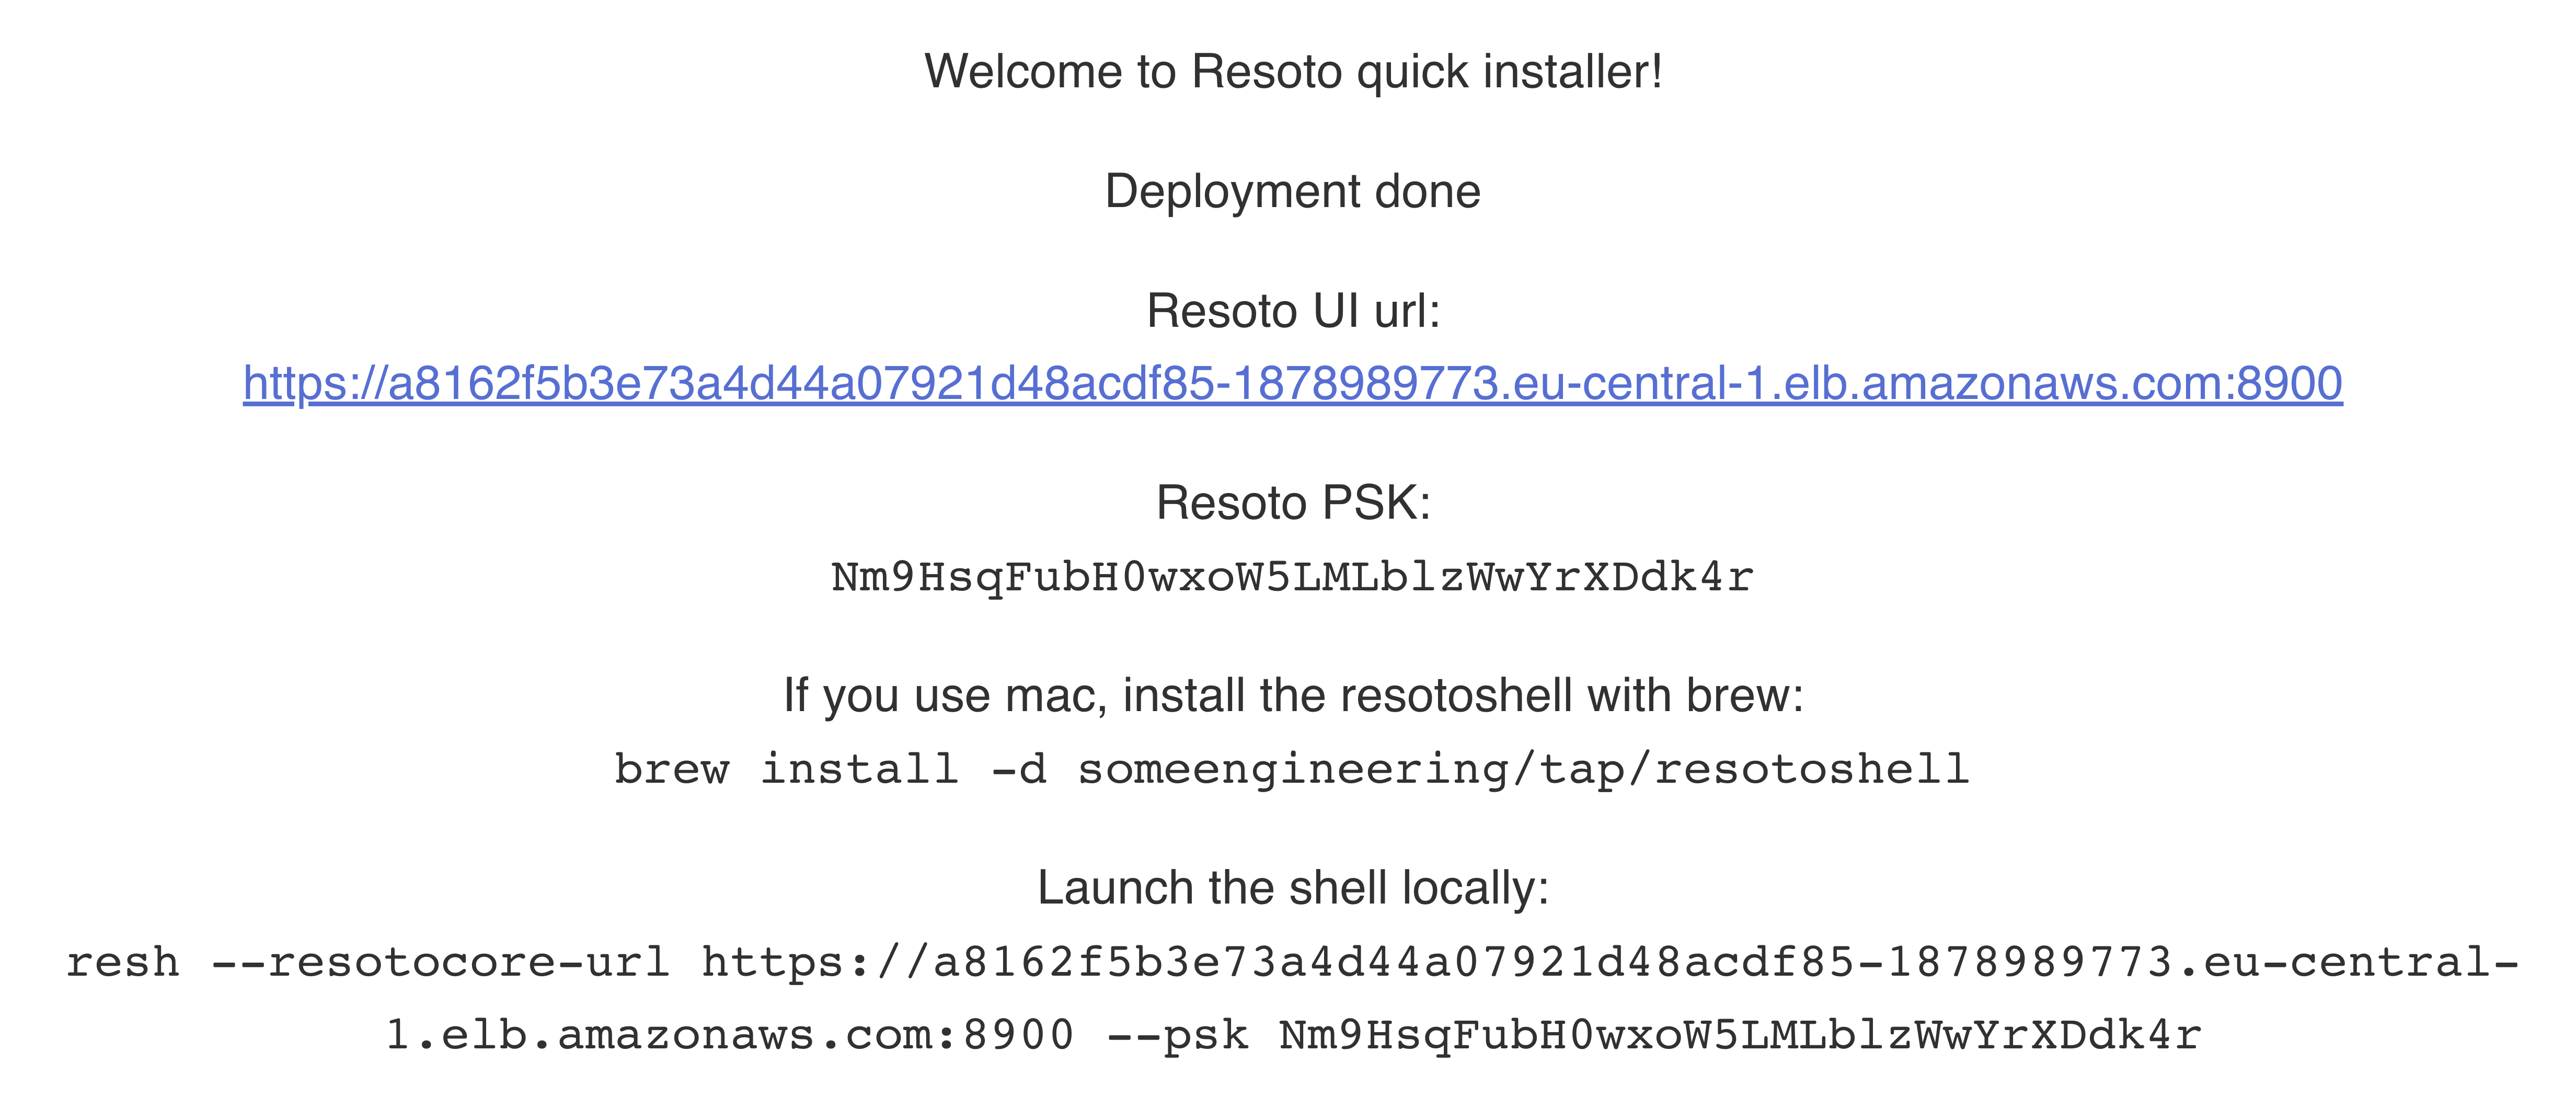 Screenshot of Resoto web installer after deployment completes